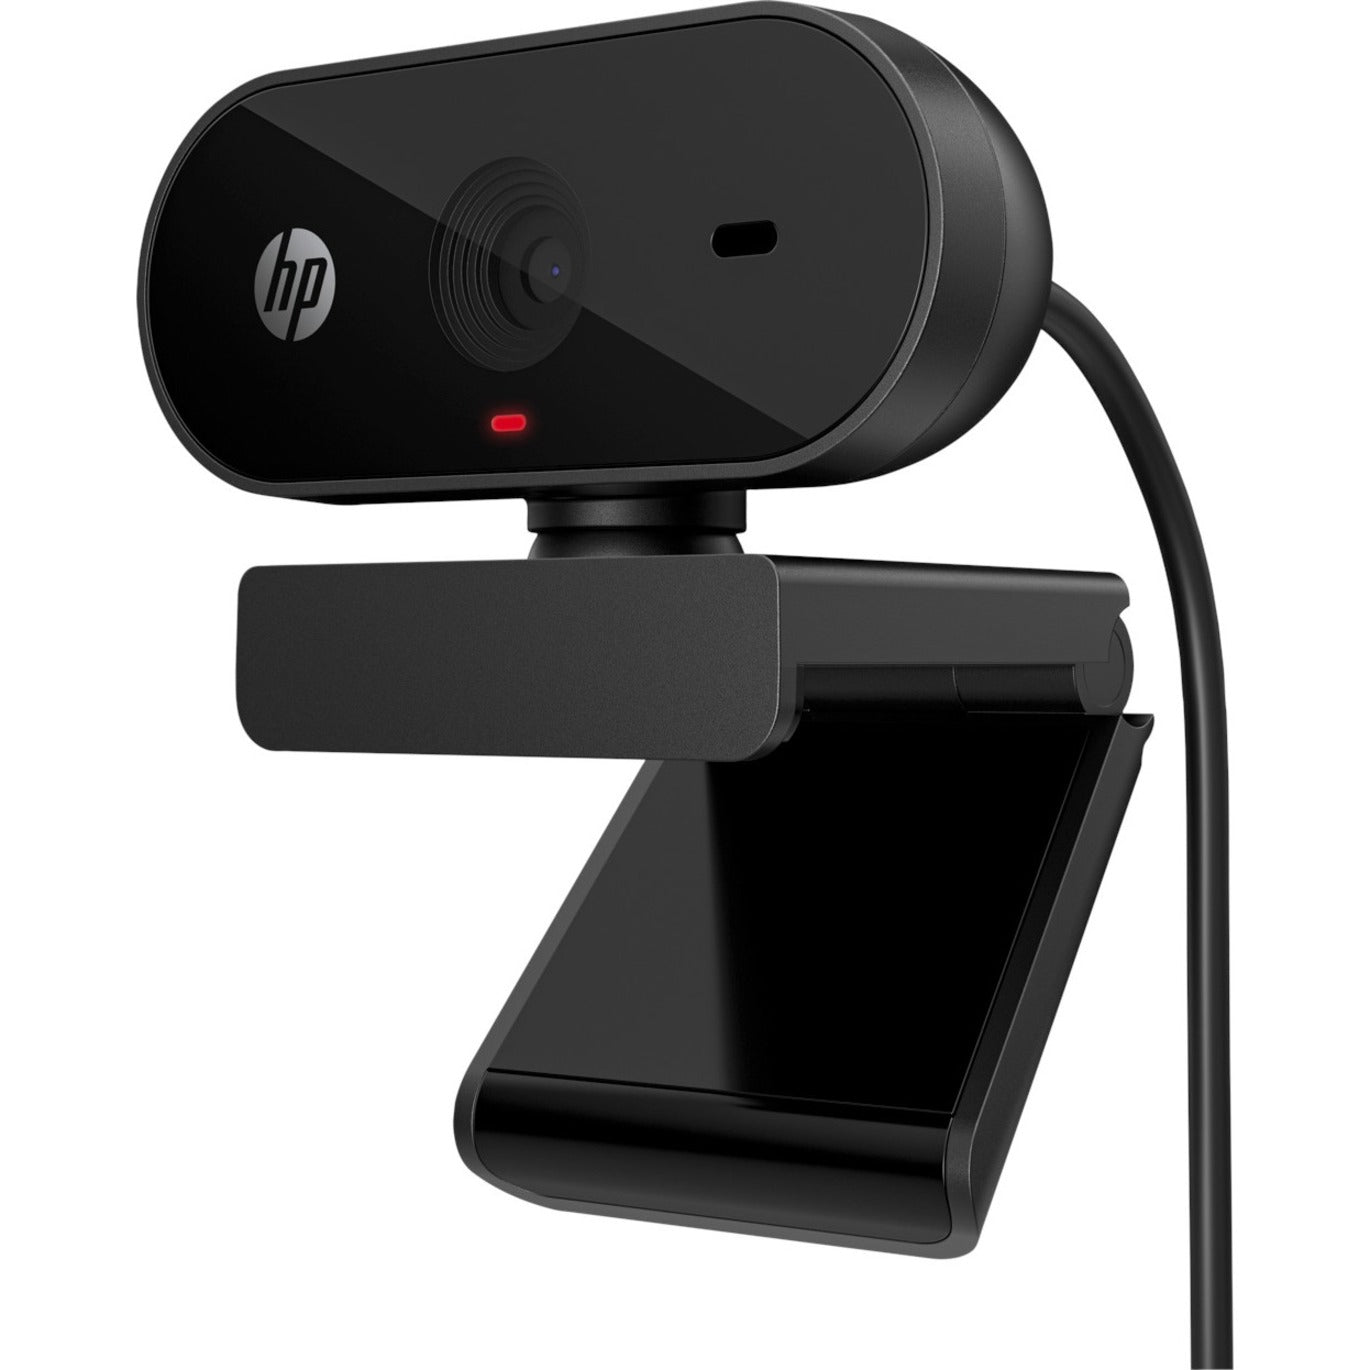 HP 53X27AA 325 FHD Webcam, USB Type A, 1920 x 1080, Built-in Microphone